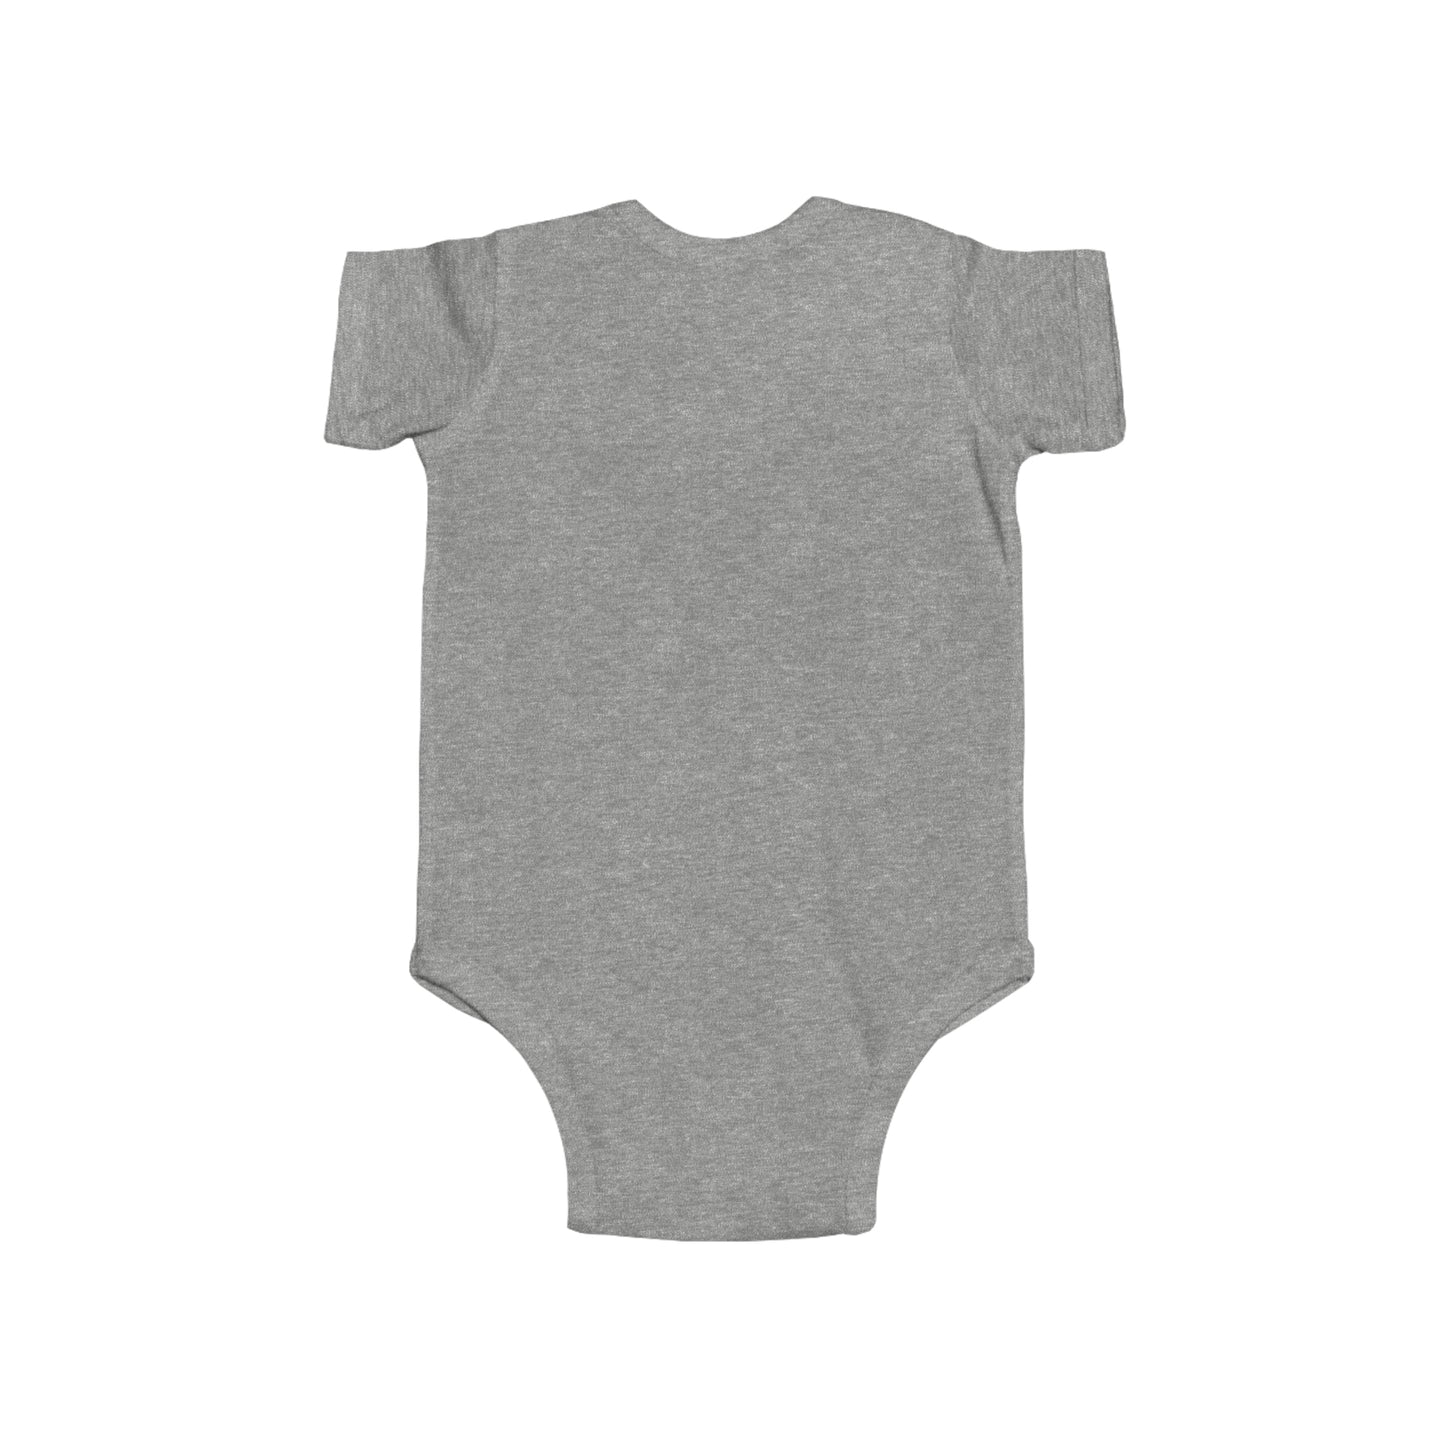 Infant Baby Chatting Graphic Jersey Bodysuit Onesie